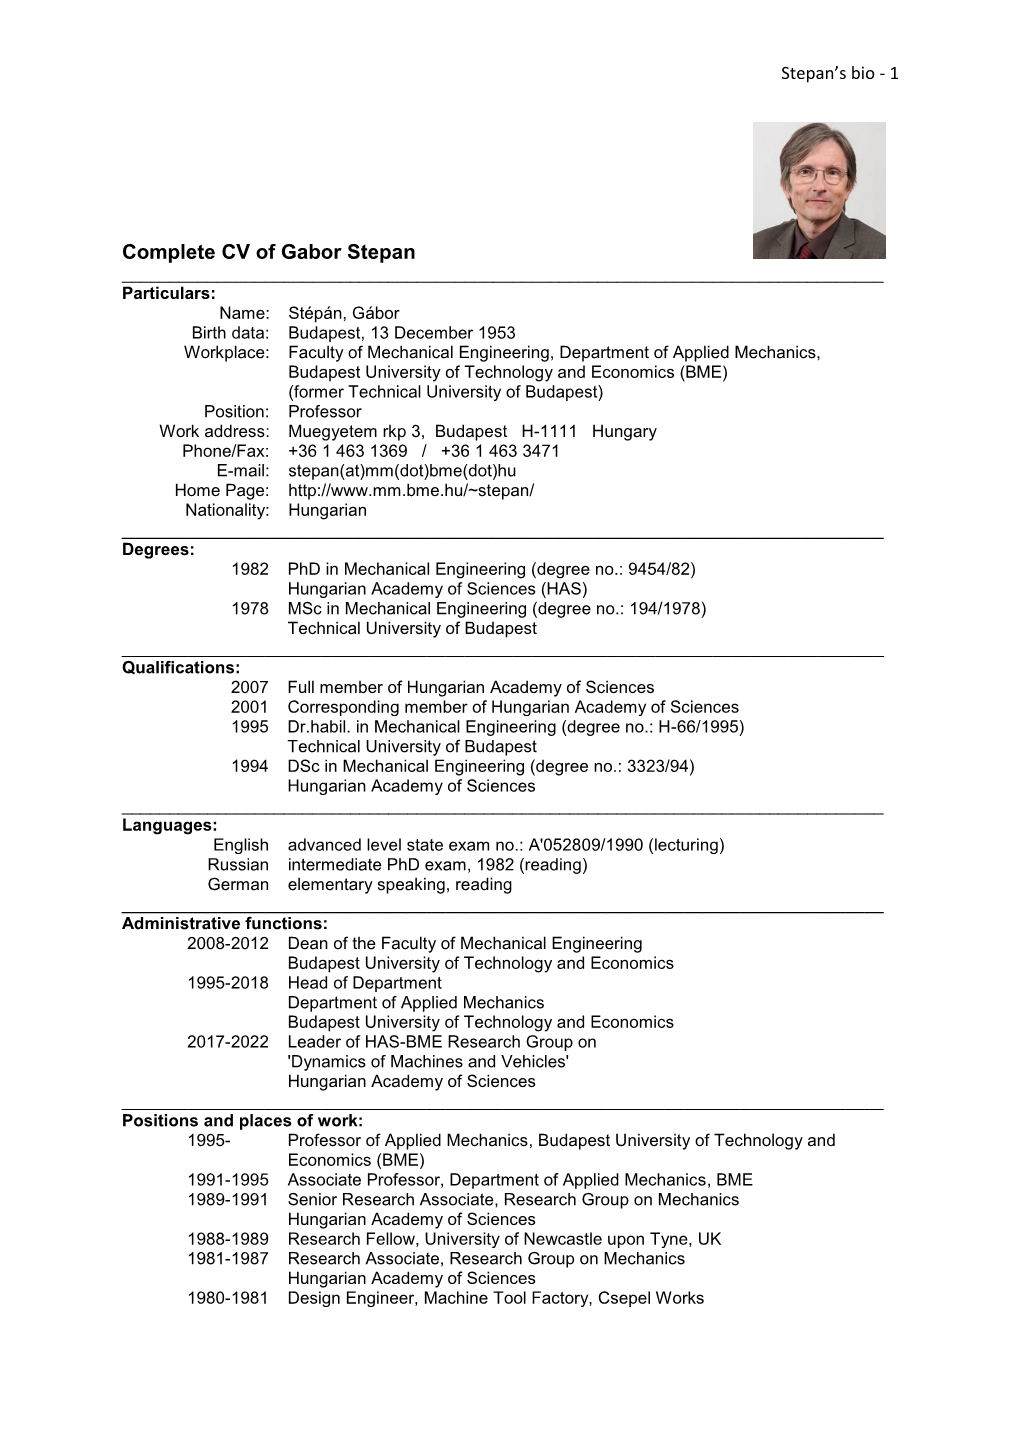 Complete CV of Gabor Stepan